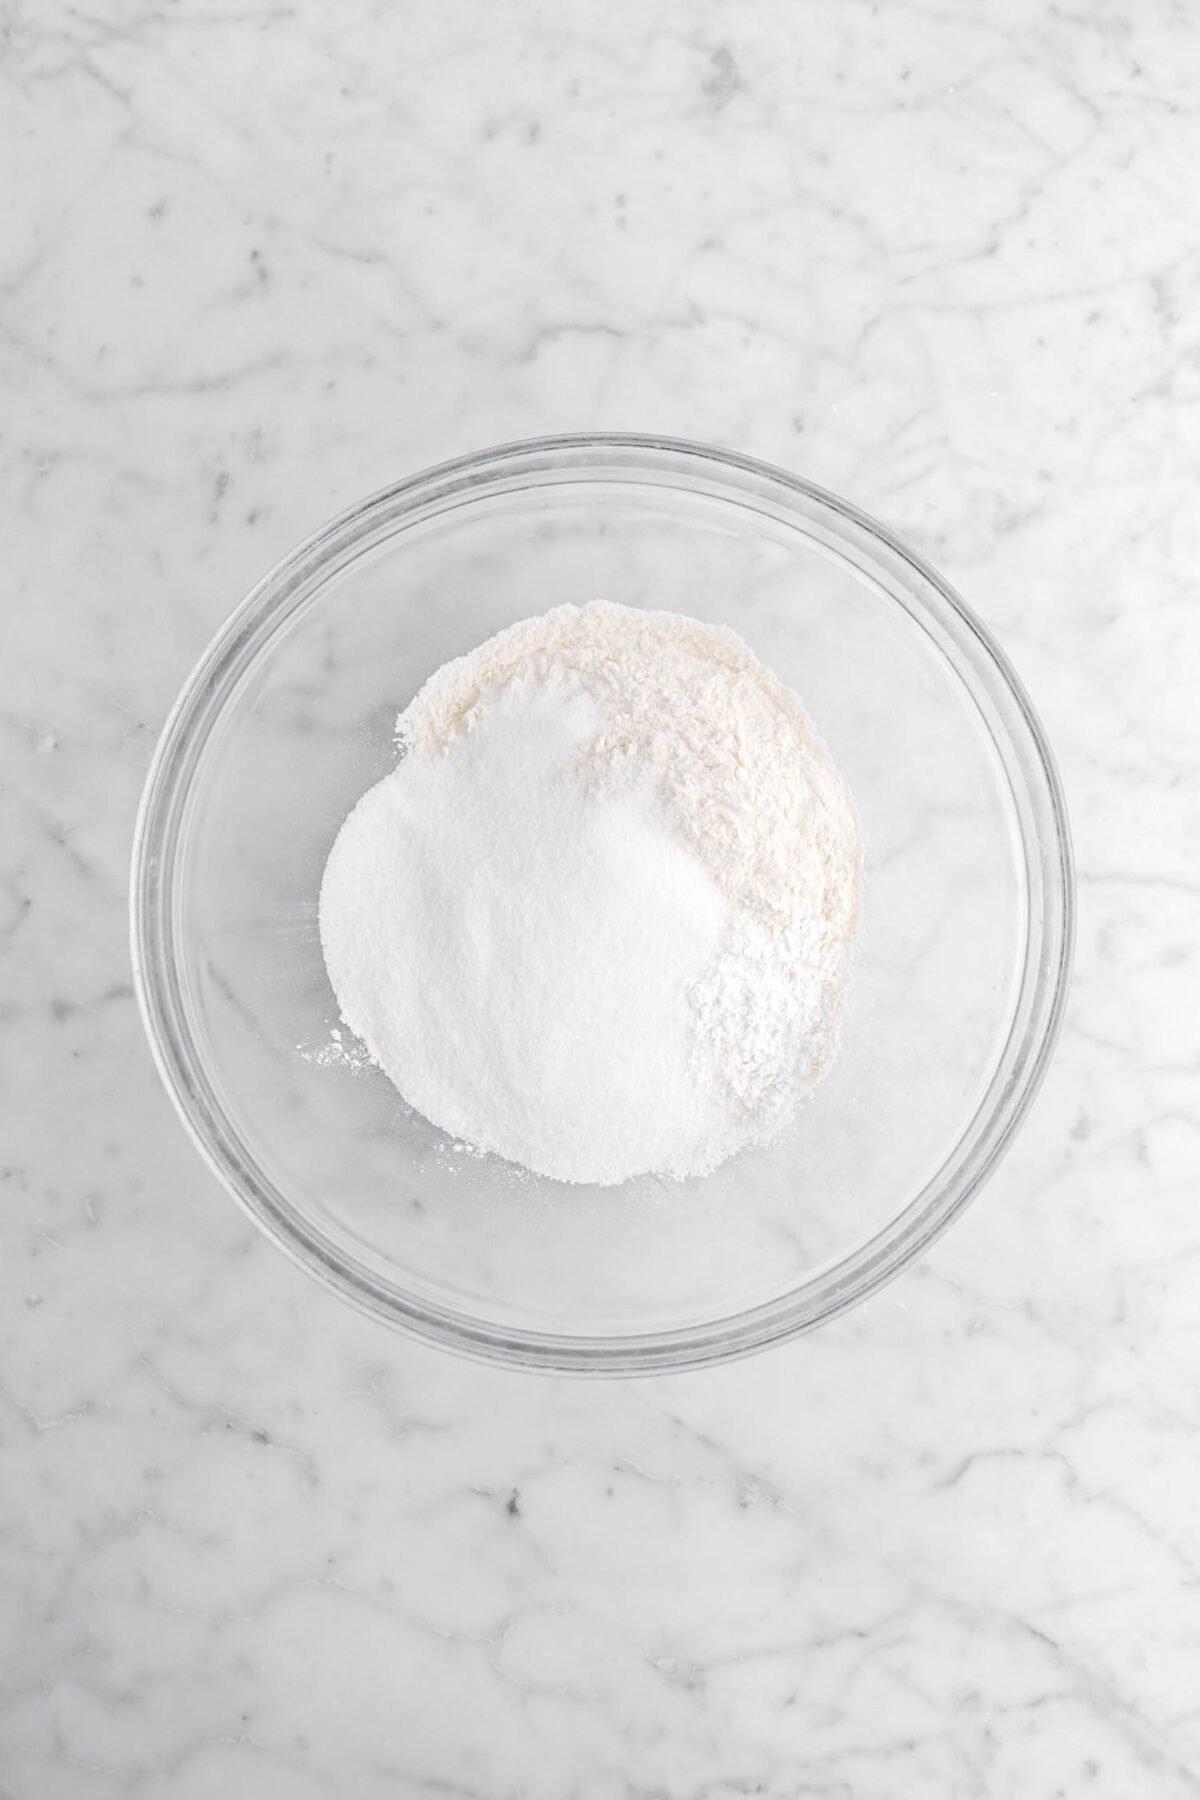 flour, sugar, baking powder, and salt in glass bowl.